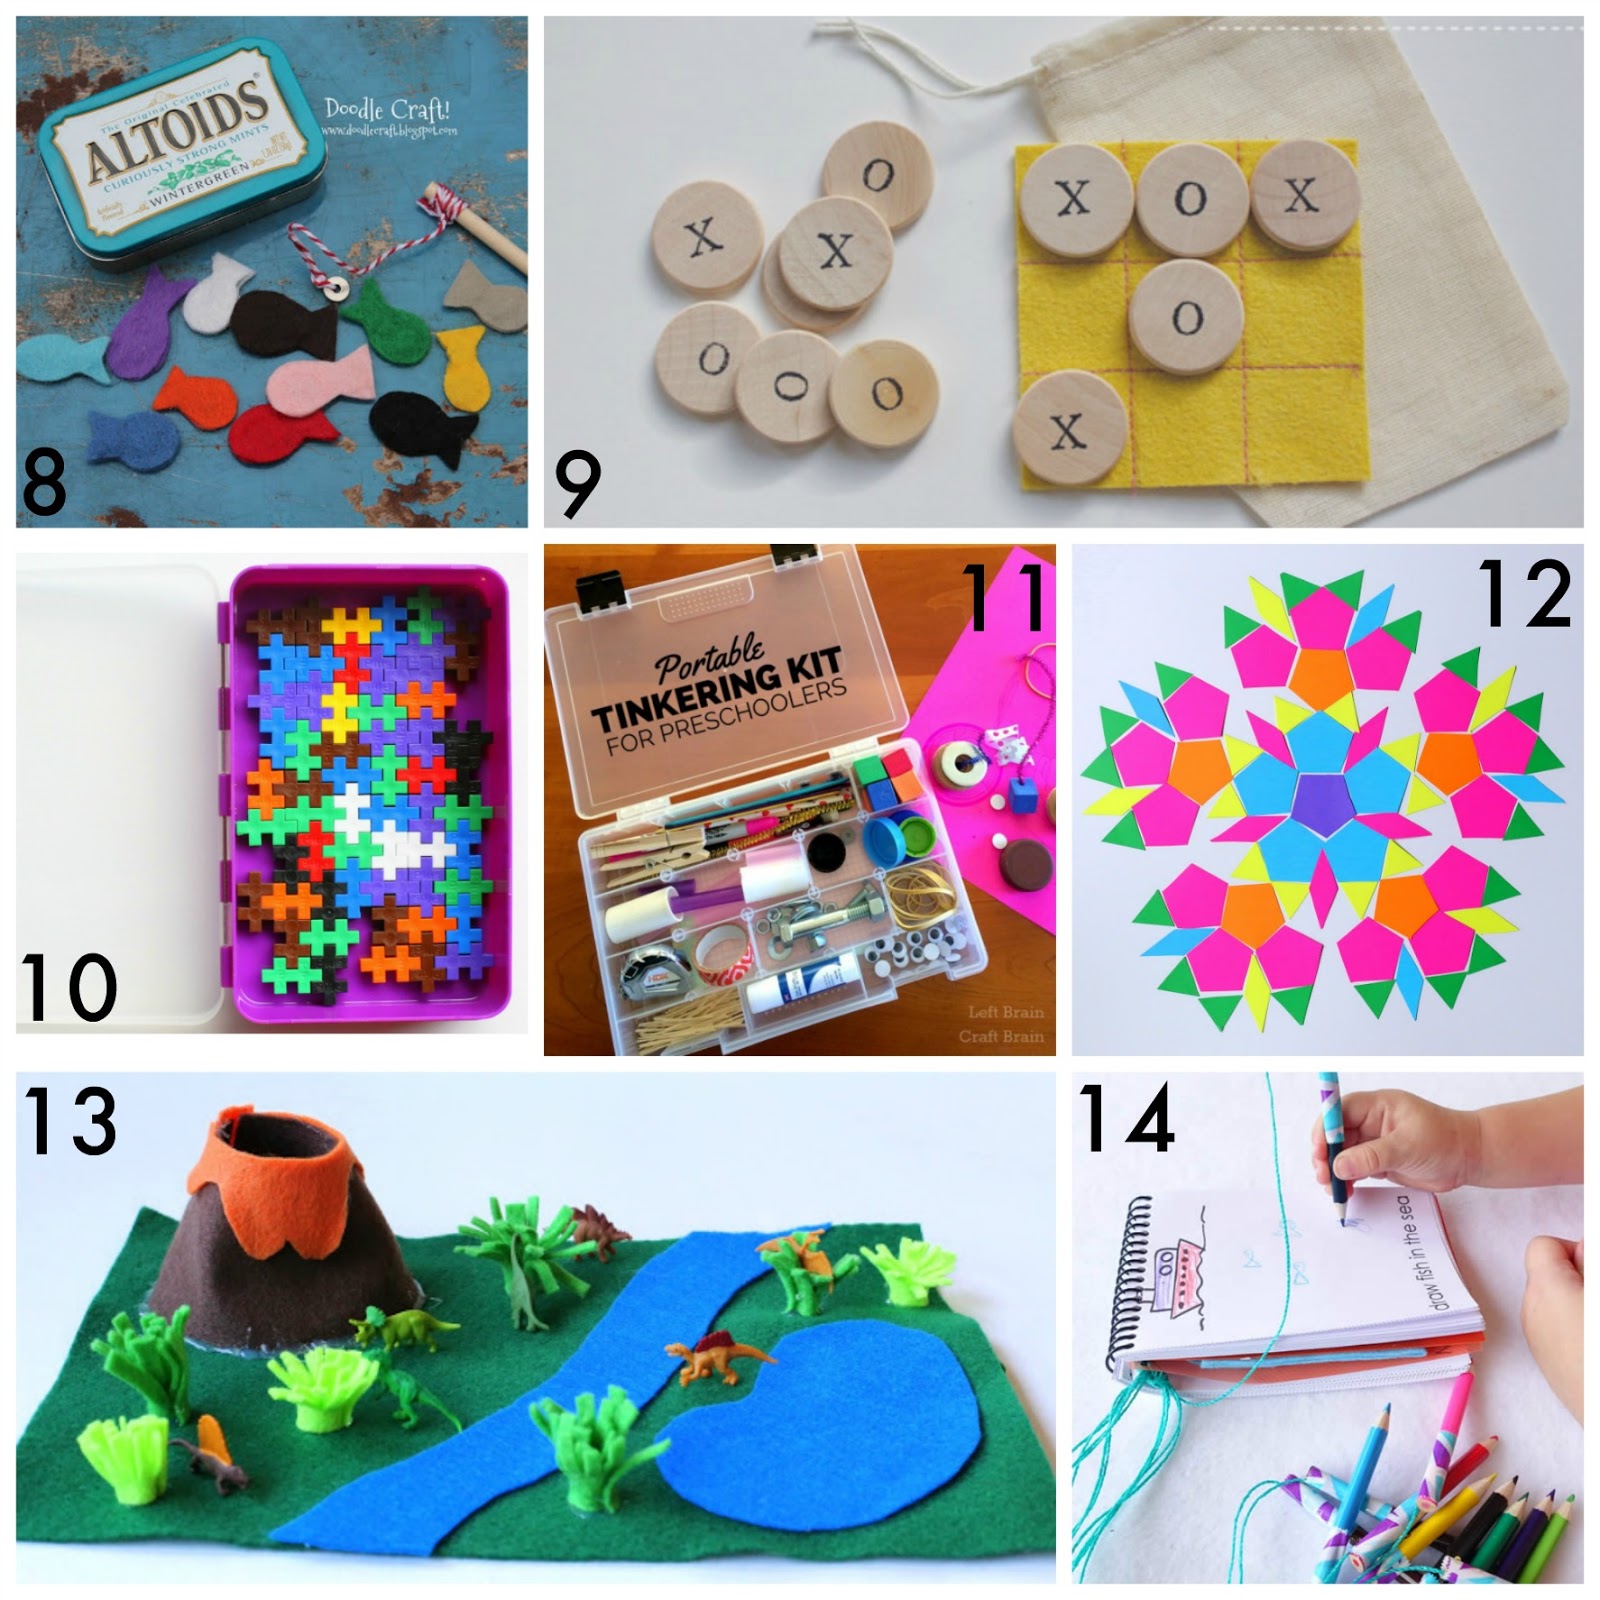 15 Fun DIY Travel Crafts to Keep Kids Busy on Long Trips - DIY & Crafts